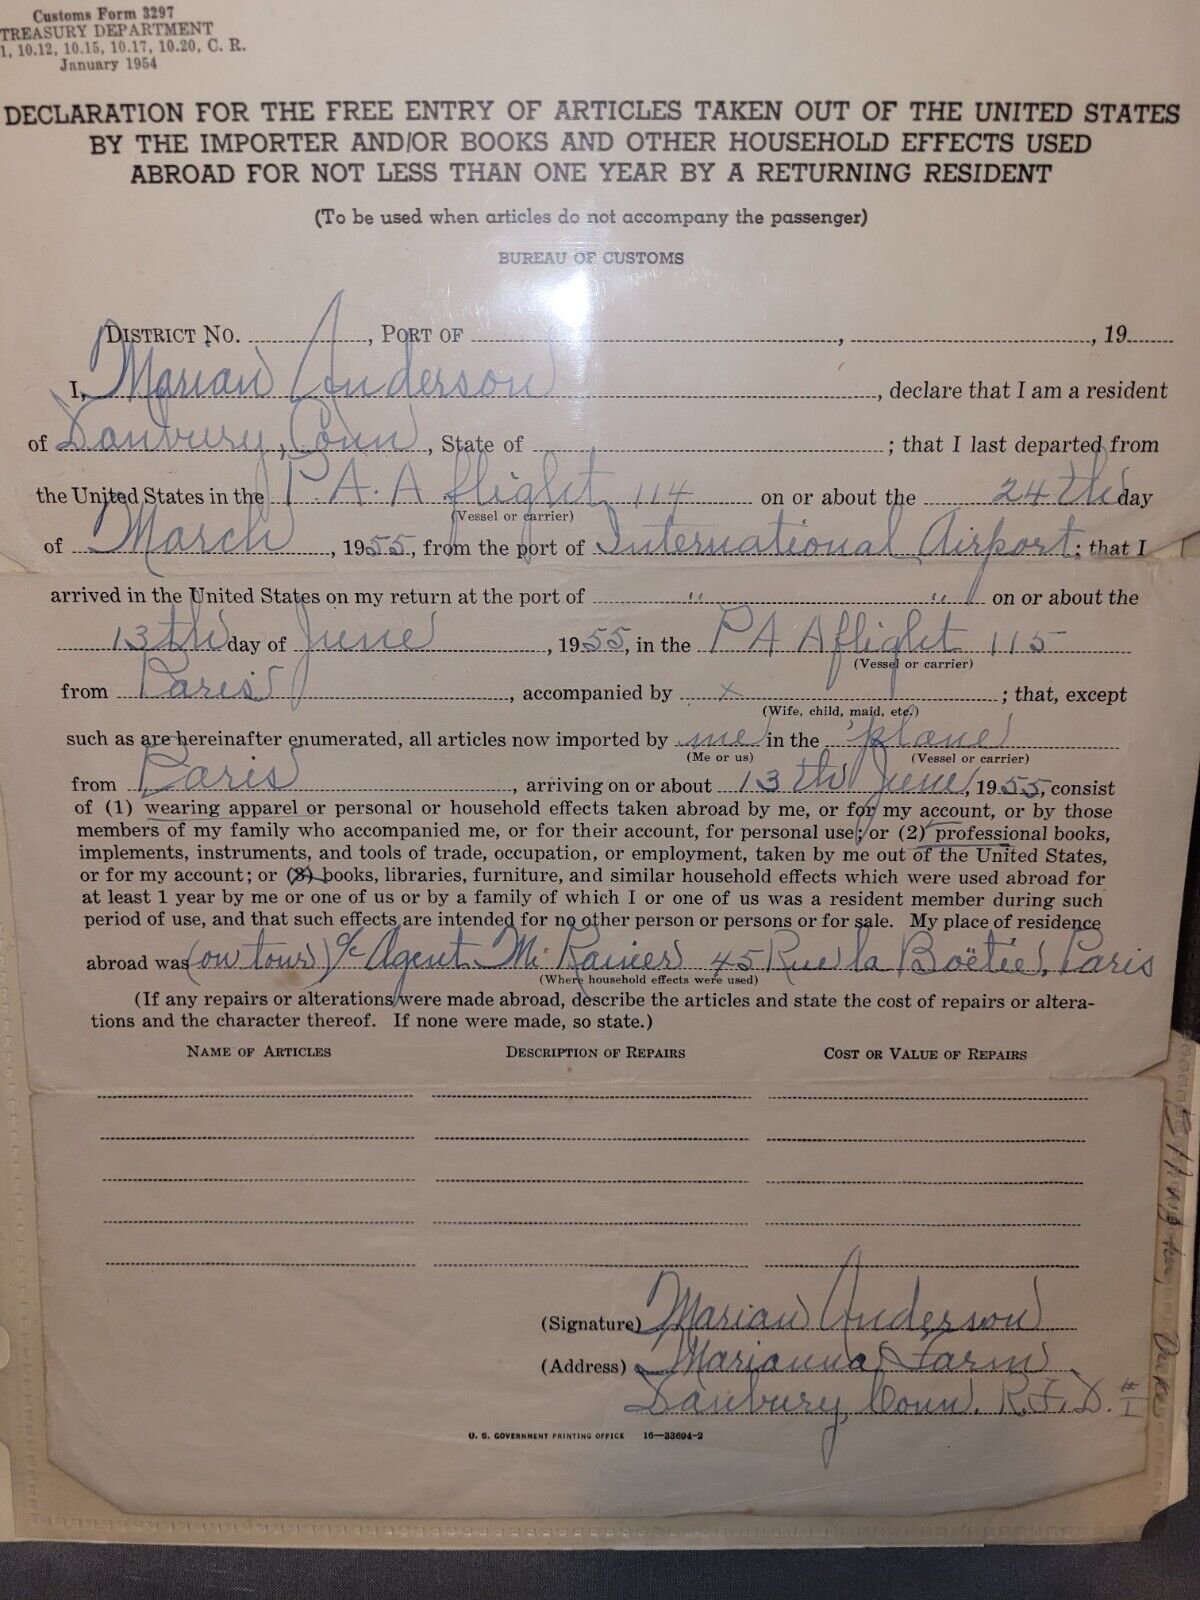 Super RARE 1955 Marian Anderson Signed US Custom Form